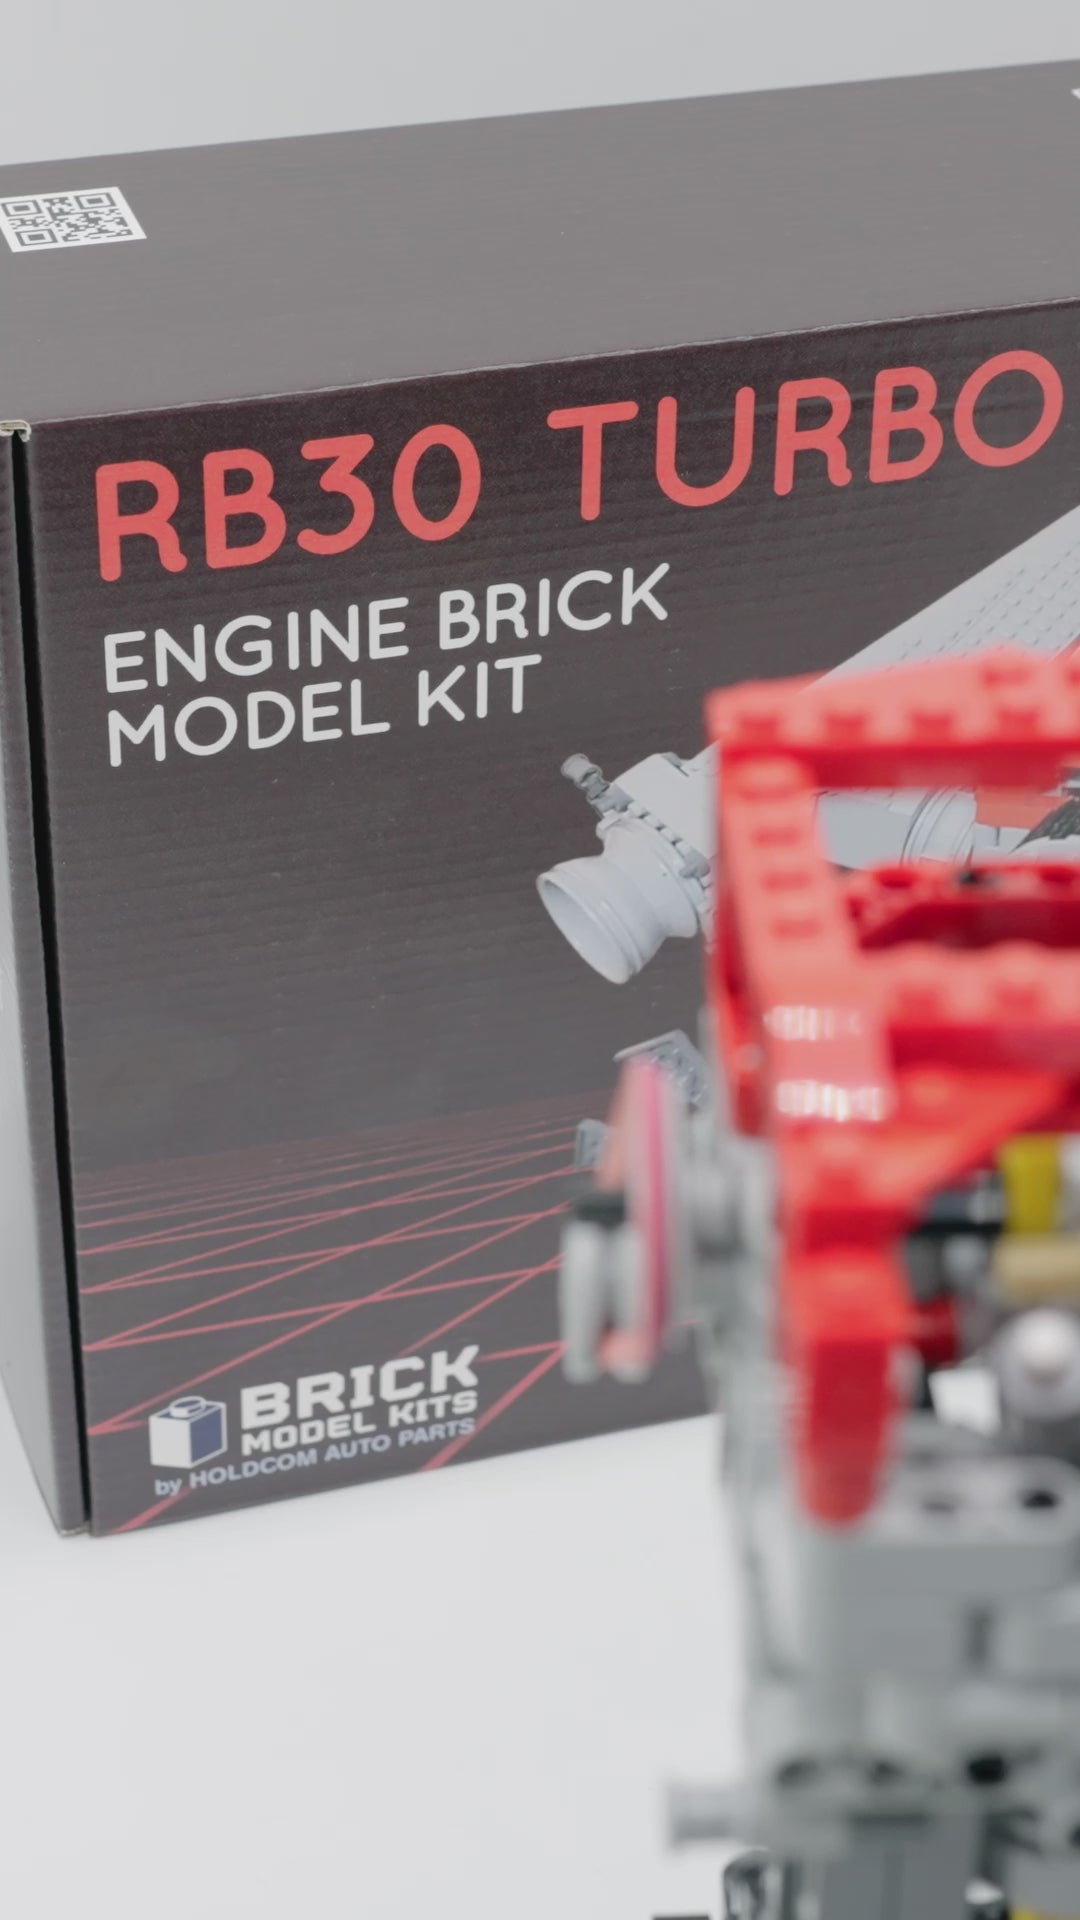 RB30 Turbo FFP Engine Brick Model Kit